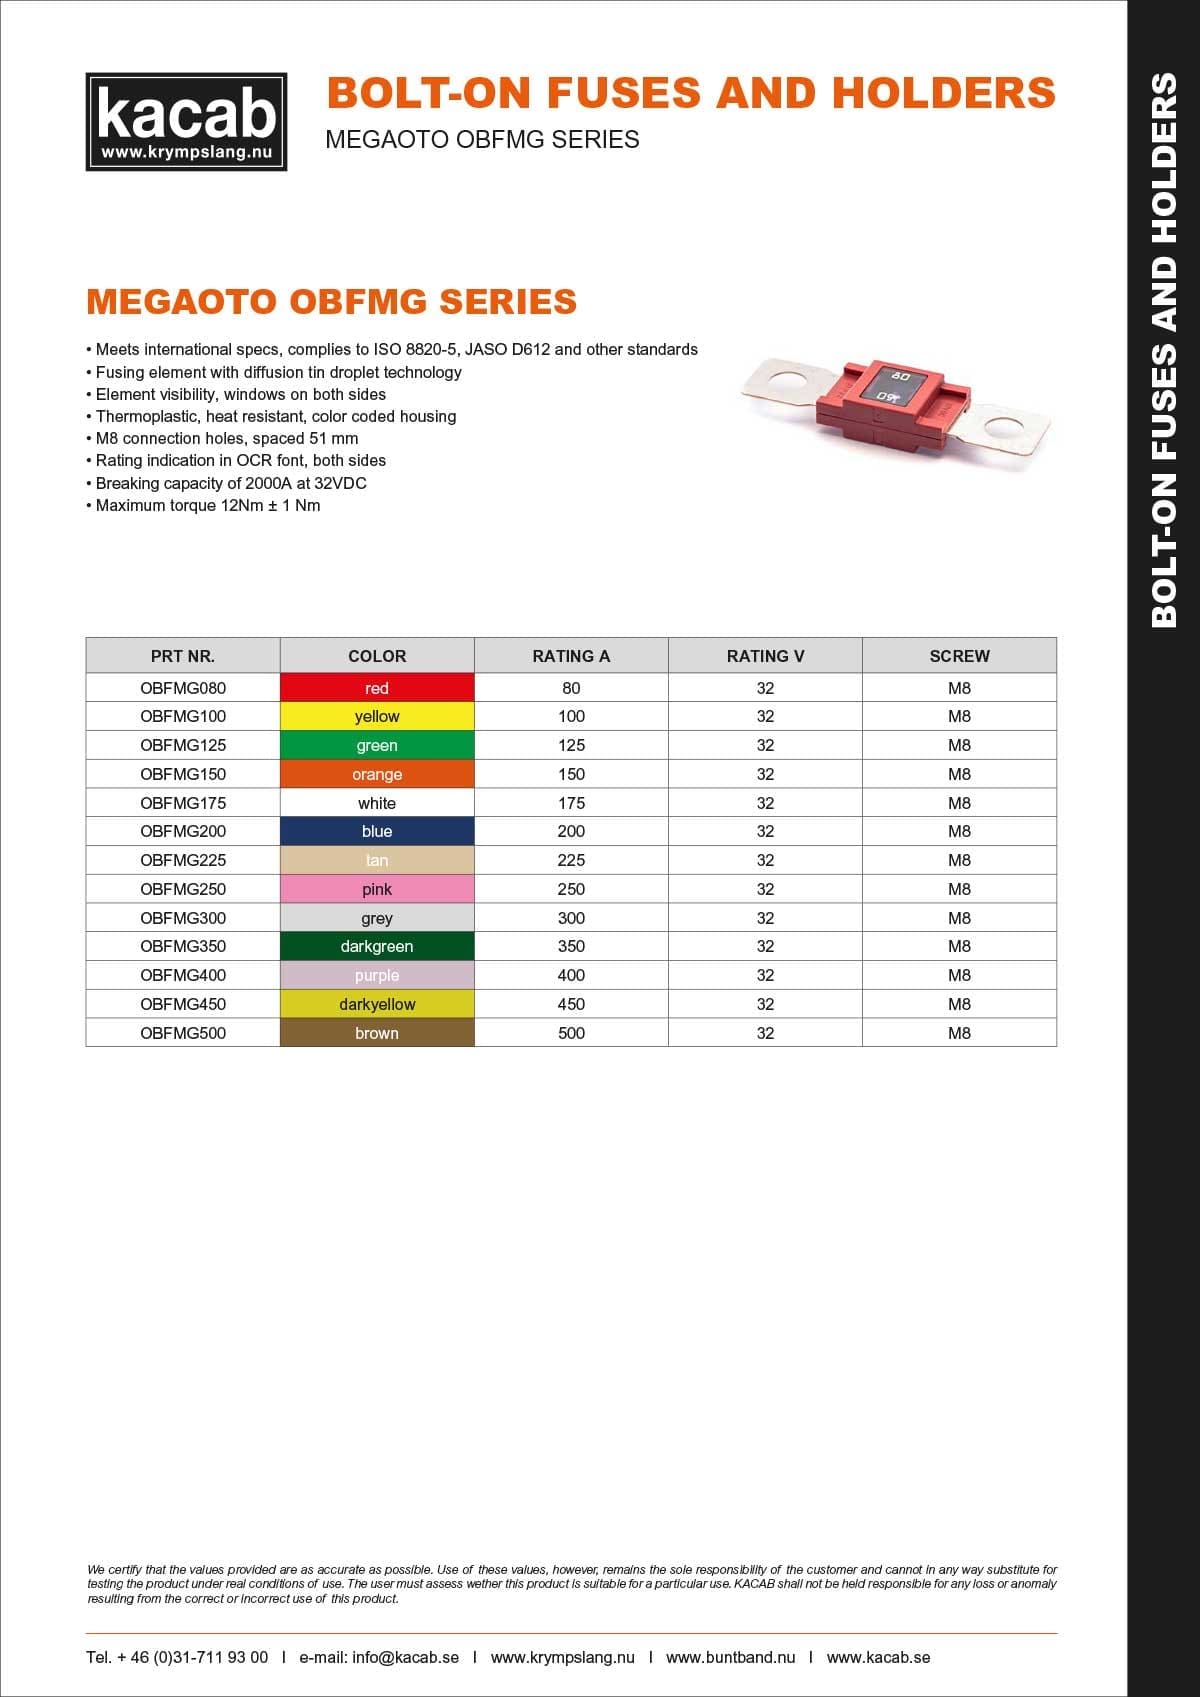 Megaoto OBFMG Series